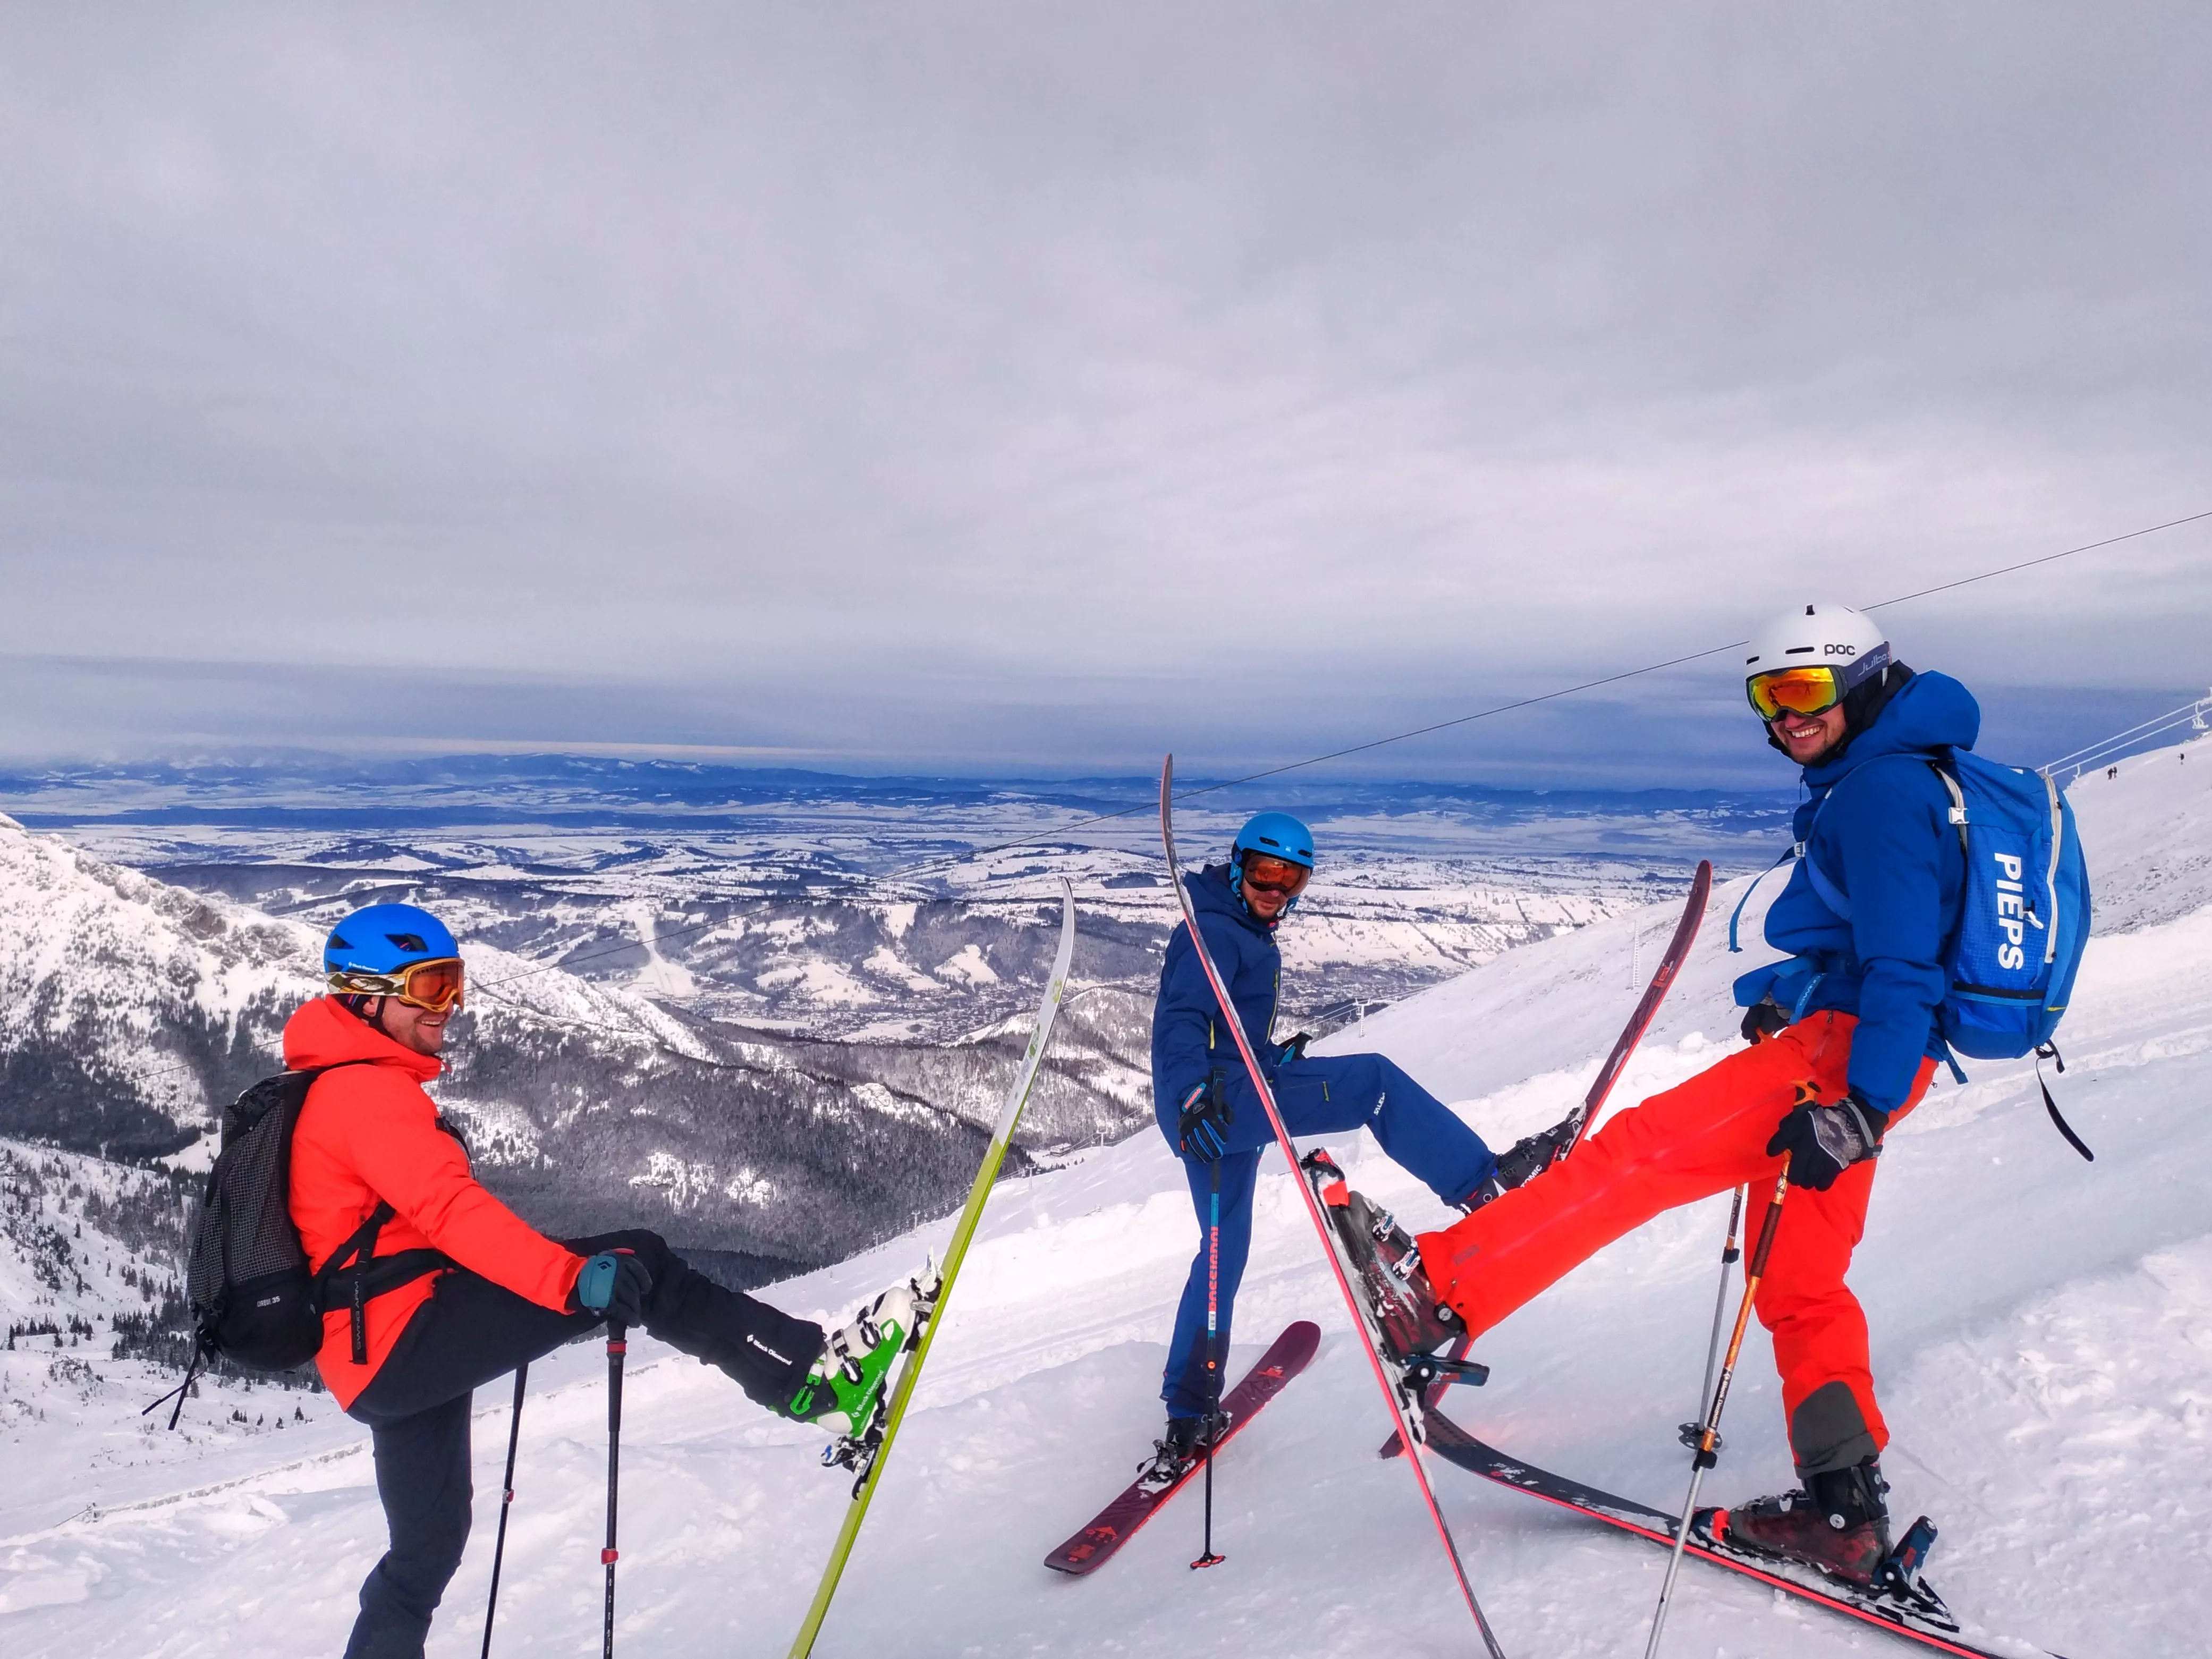 Zakopane Ski Rental in Poland, Europe | Snowboarding,Skiing - Rated 0.9